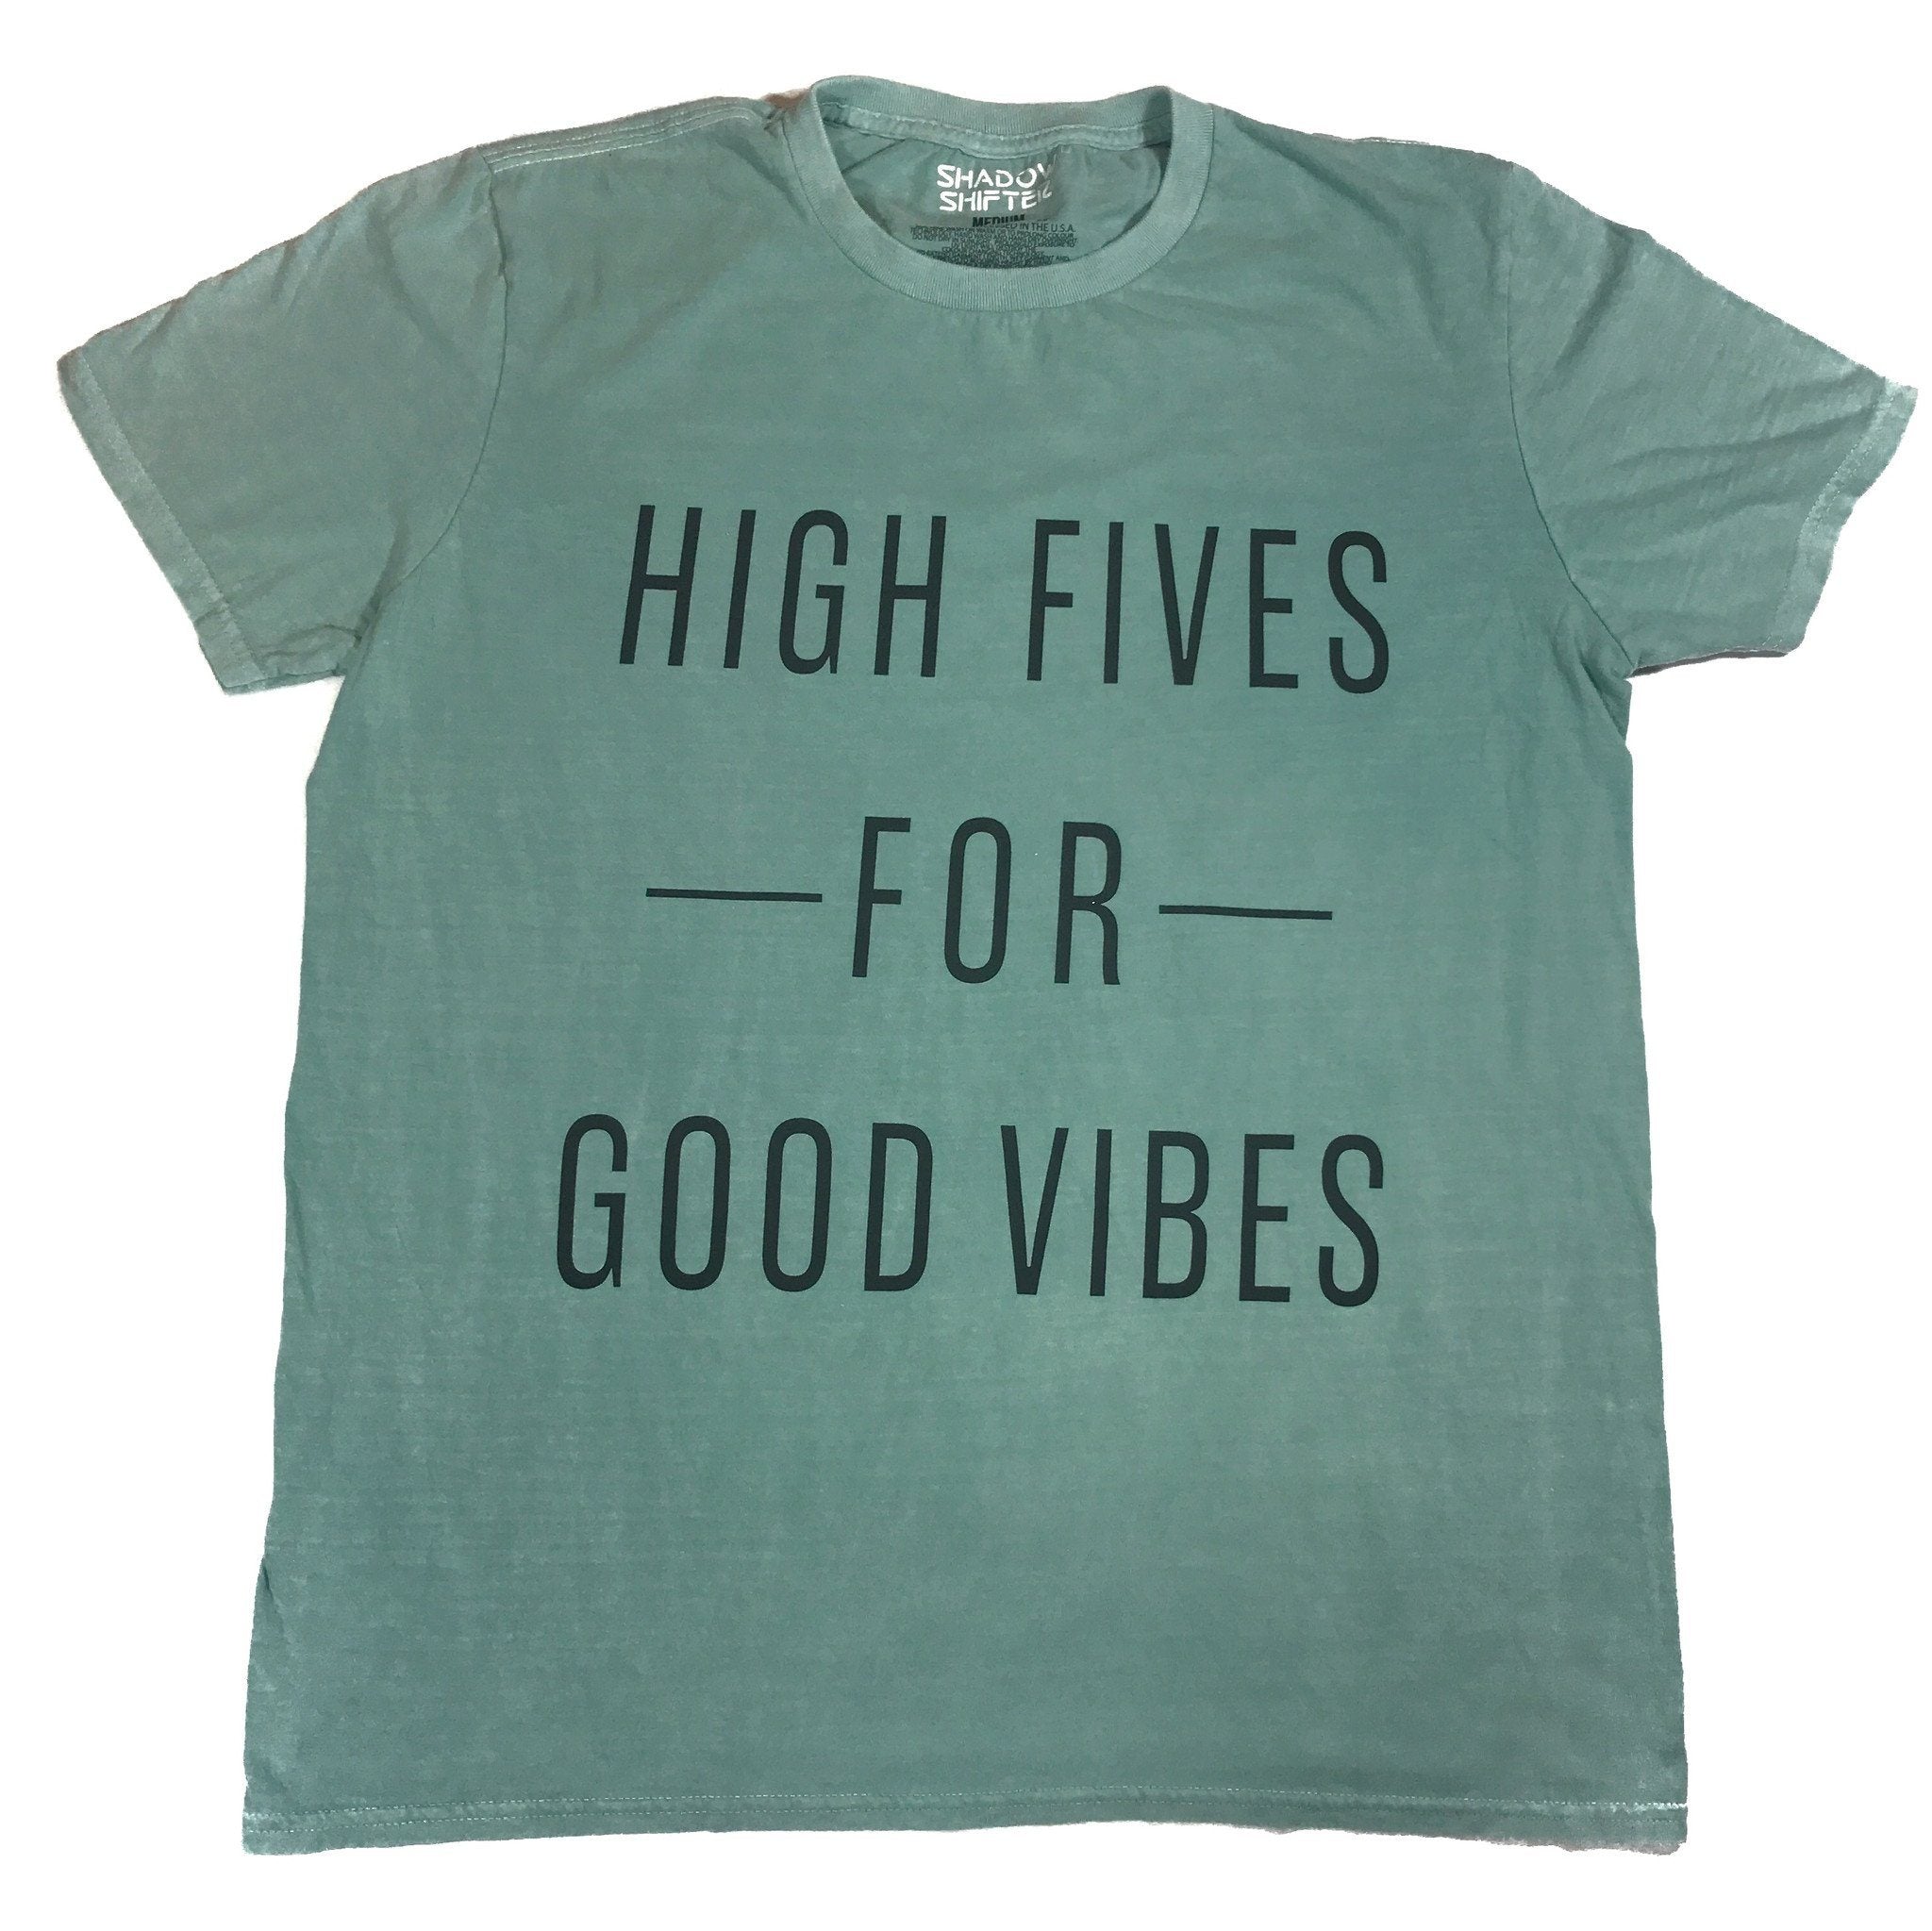 Color Changing High Fives for Good Vibes T-shirt - La Clé 